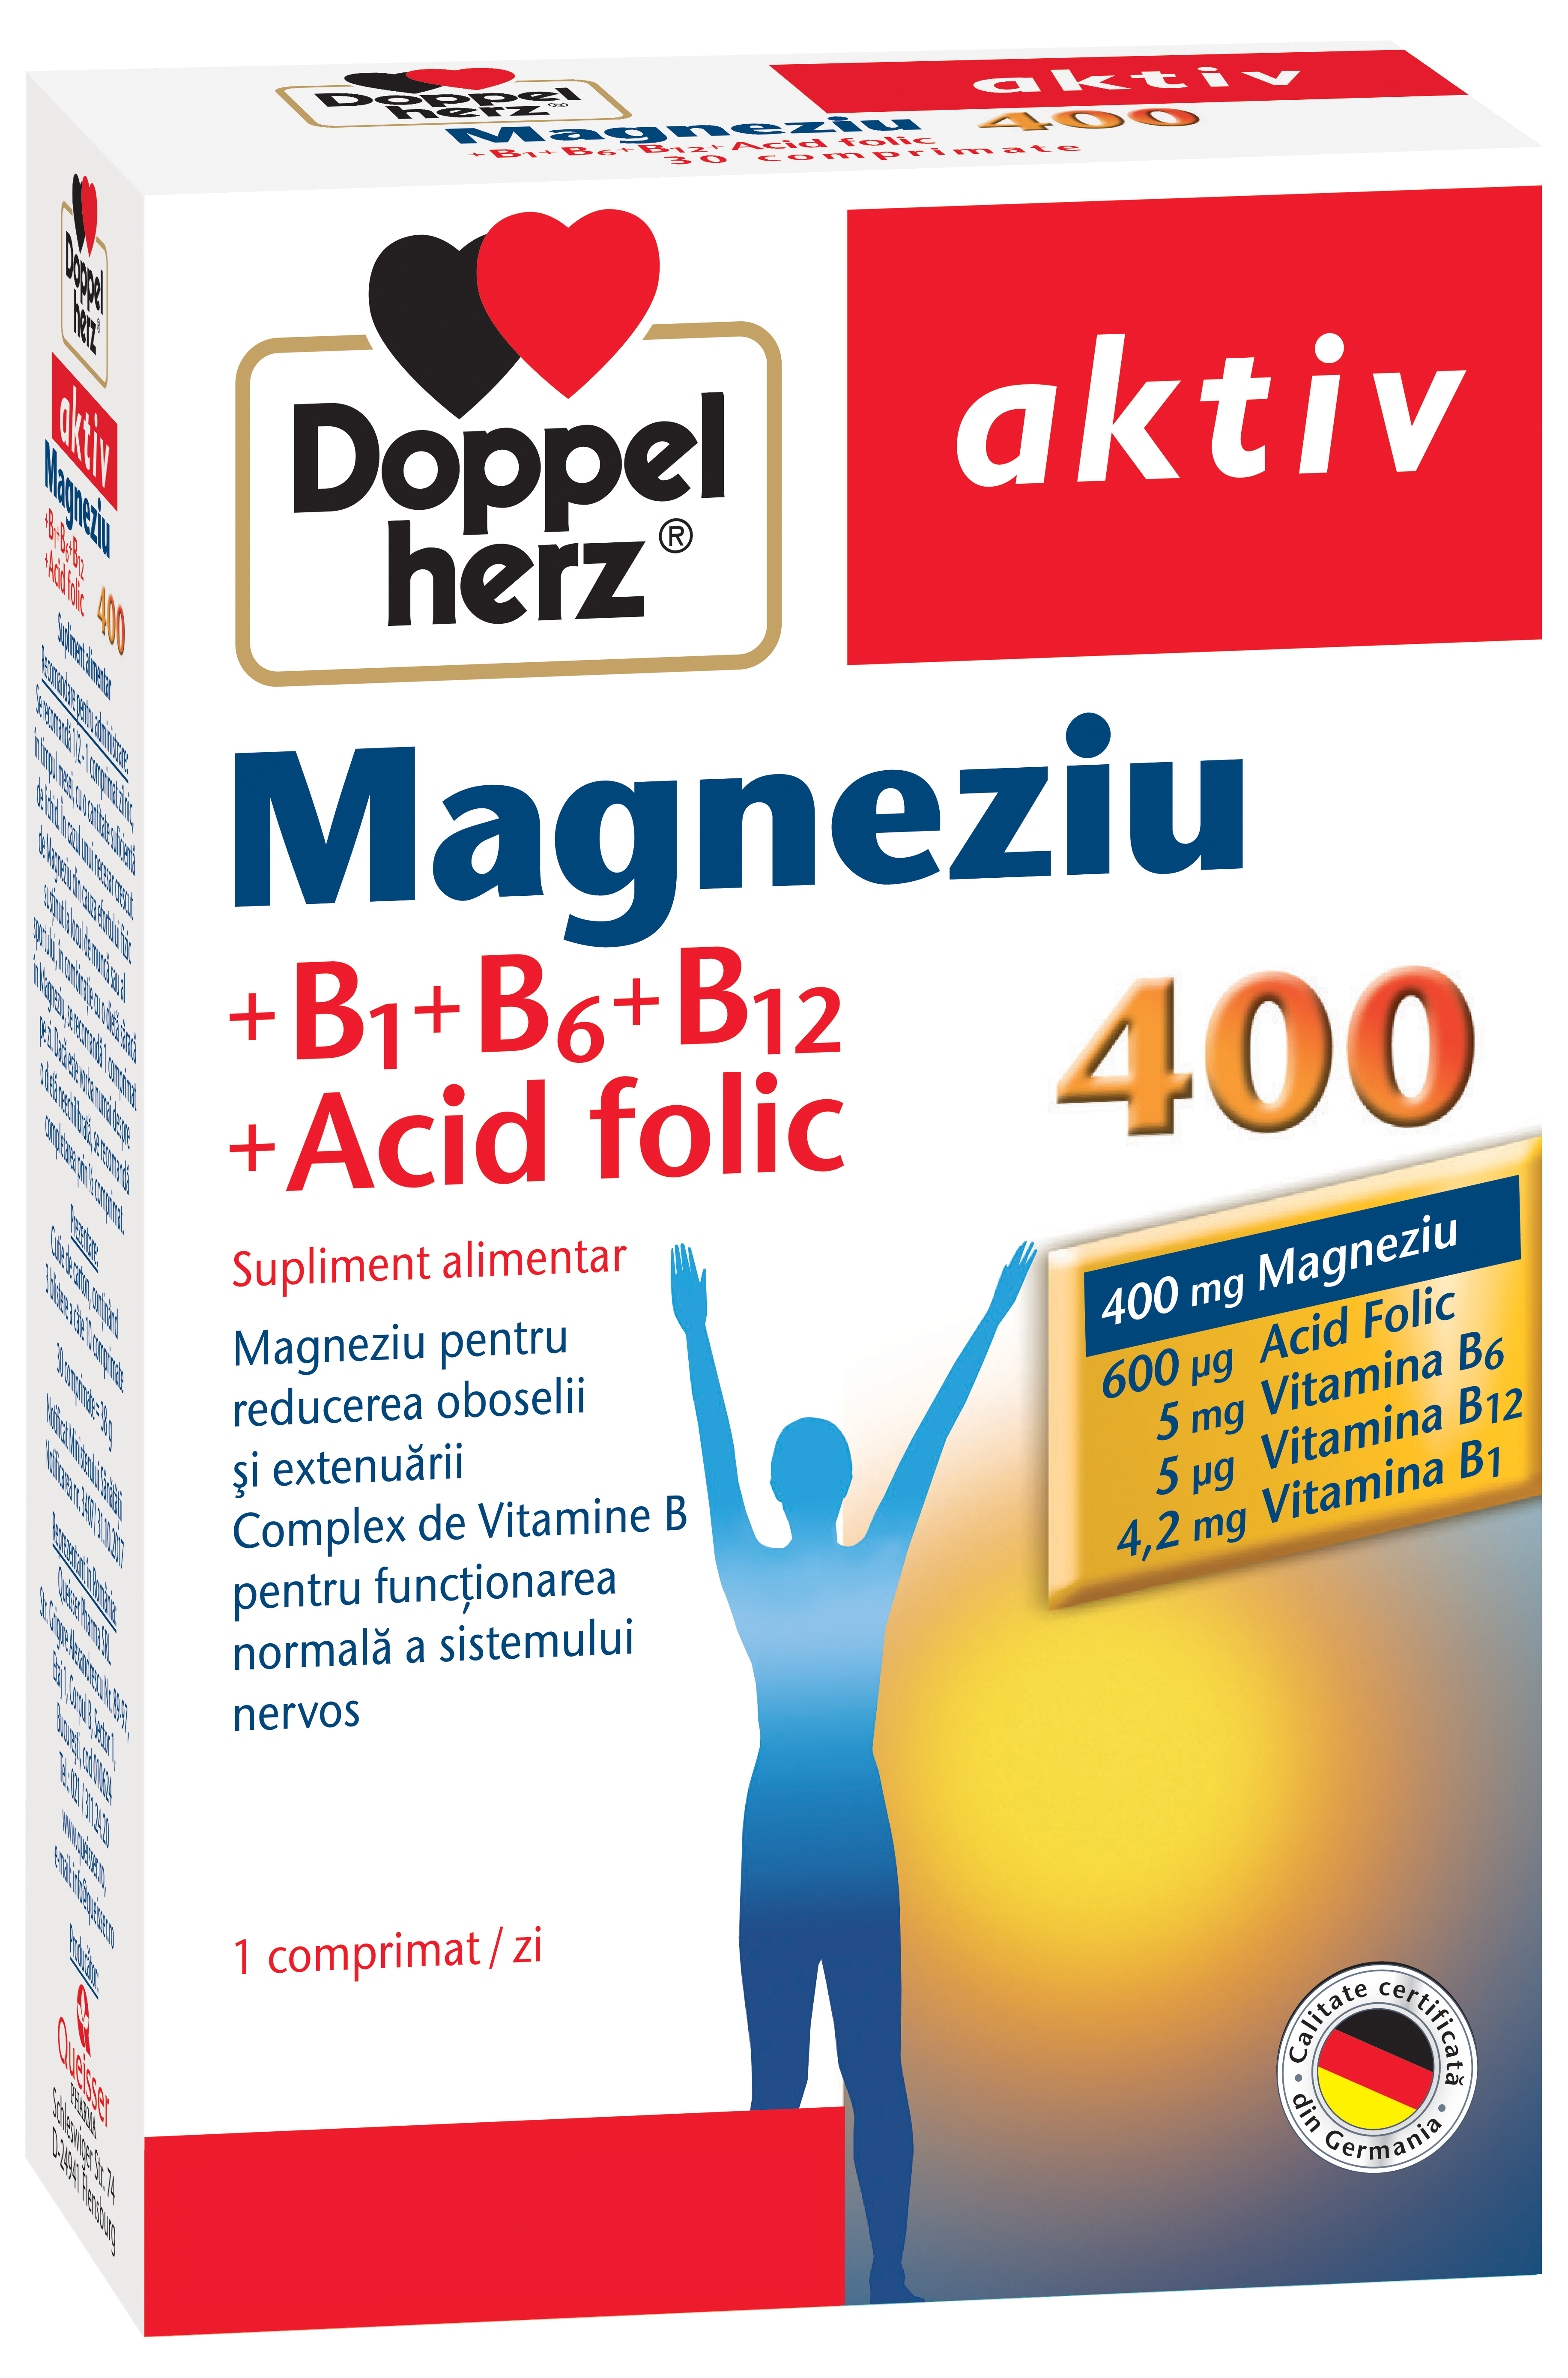 Adulti - Doppelherz Aktiv Magneziu 400 + B1 + B6 + B12 + Acid Folic, 30 comprimate, sinapis.ro